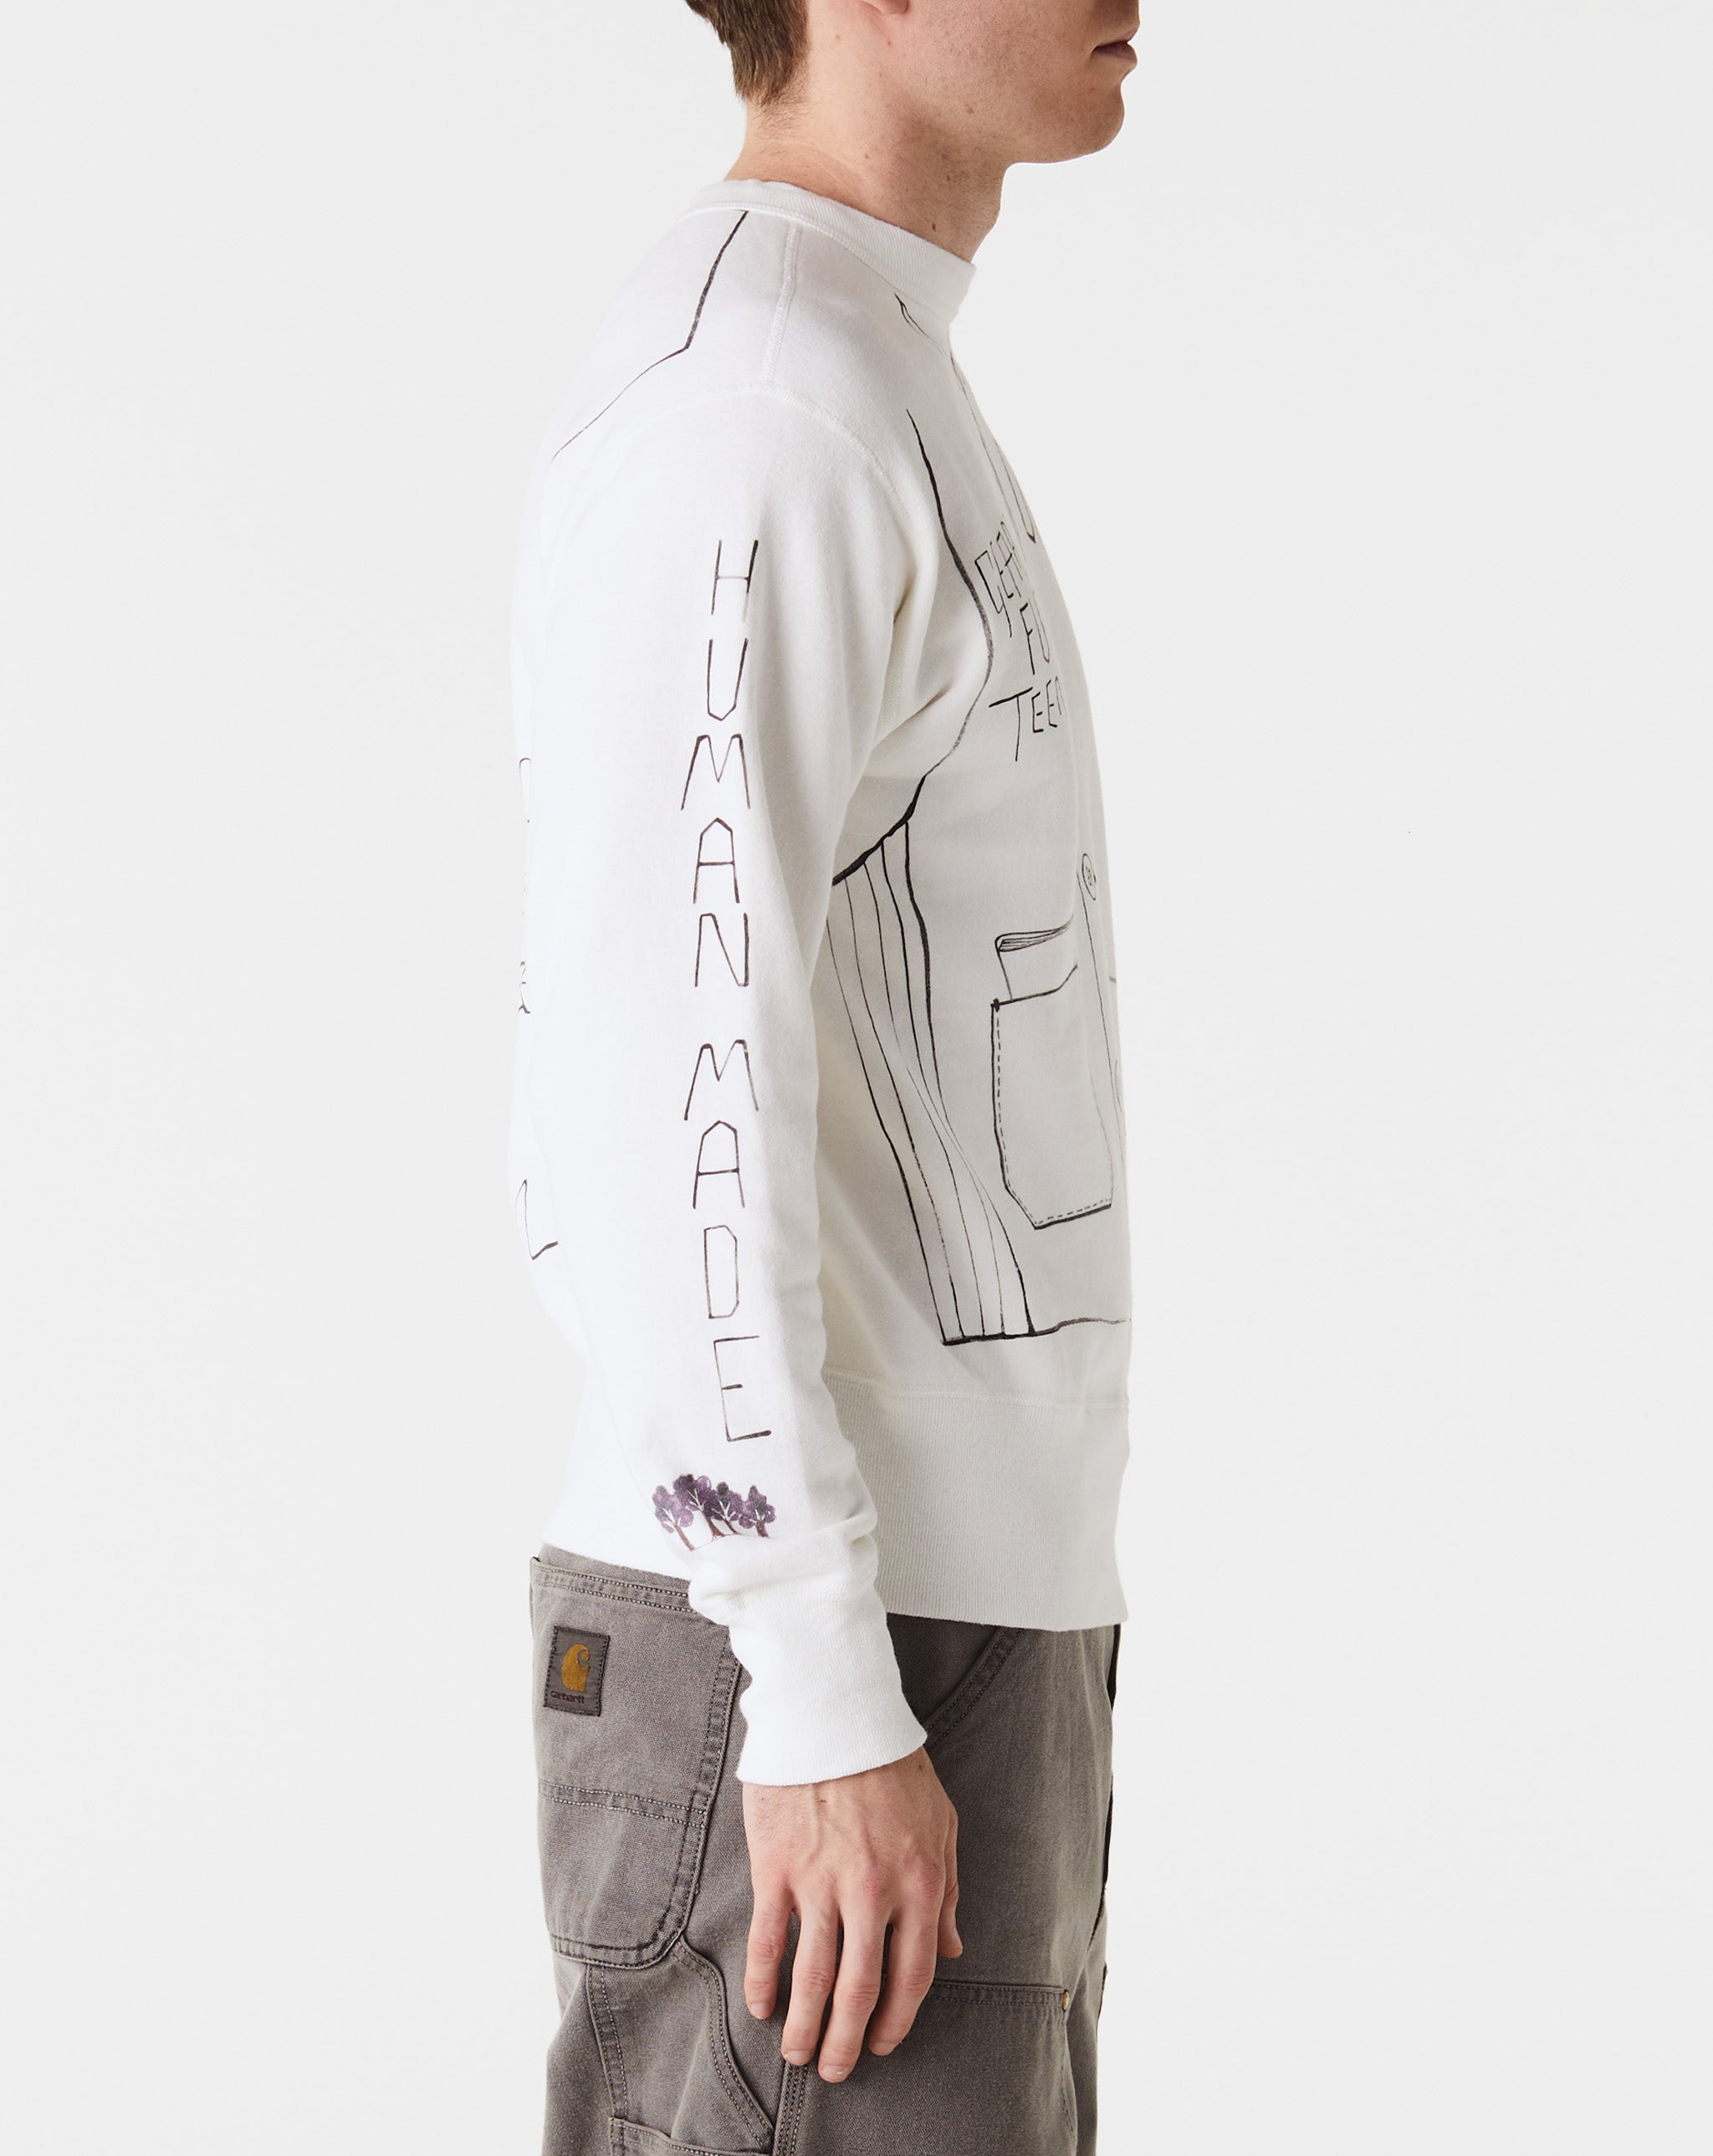 Human Made Graphic Sweatshirt  - XHIBITION